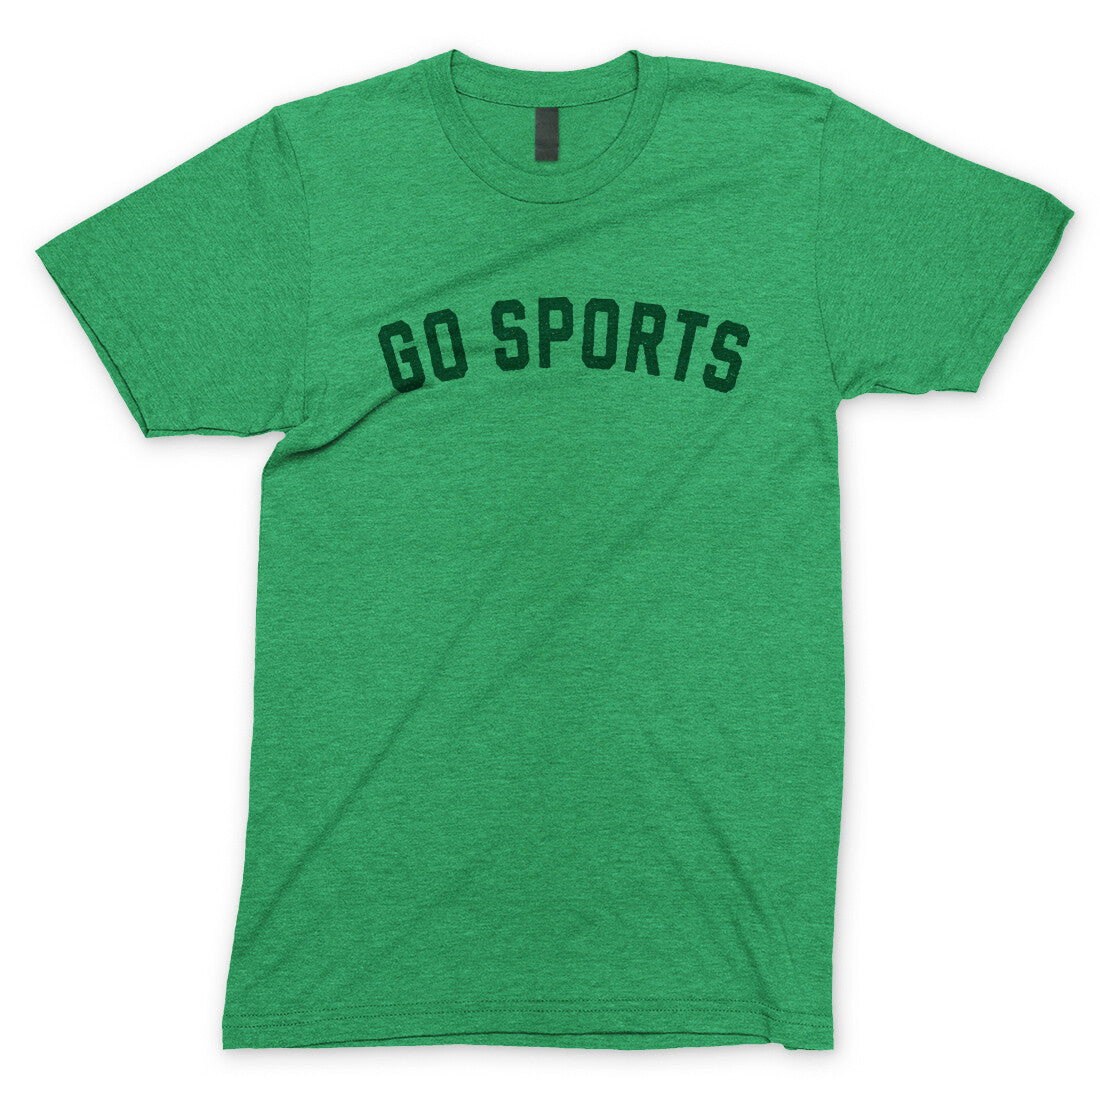 Go Sports in Heather Irish Green Color